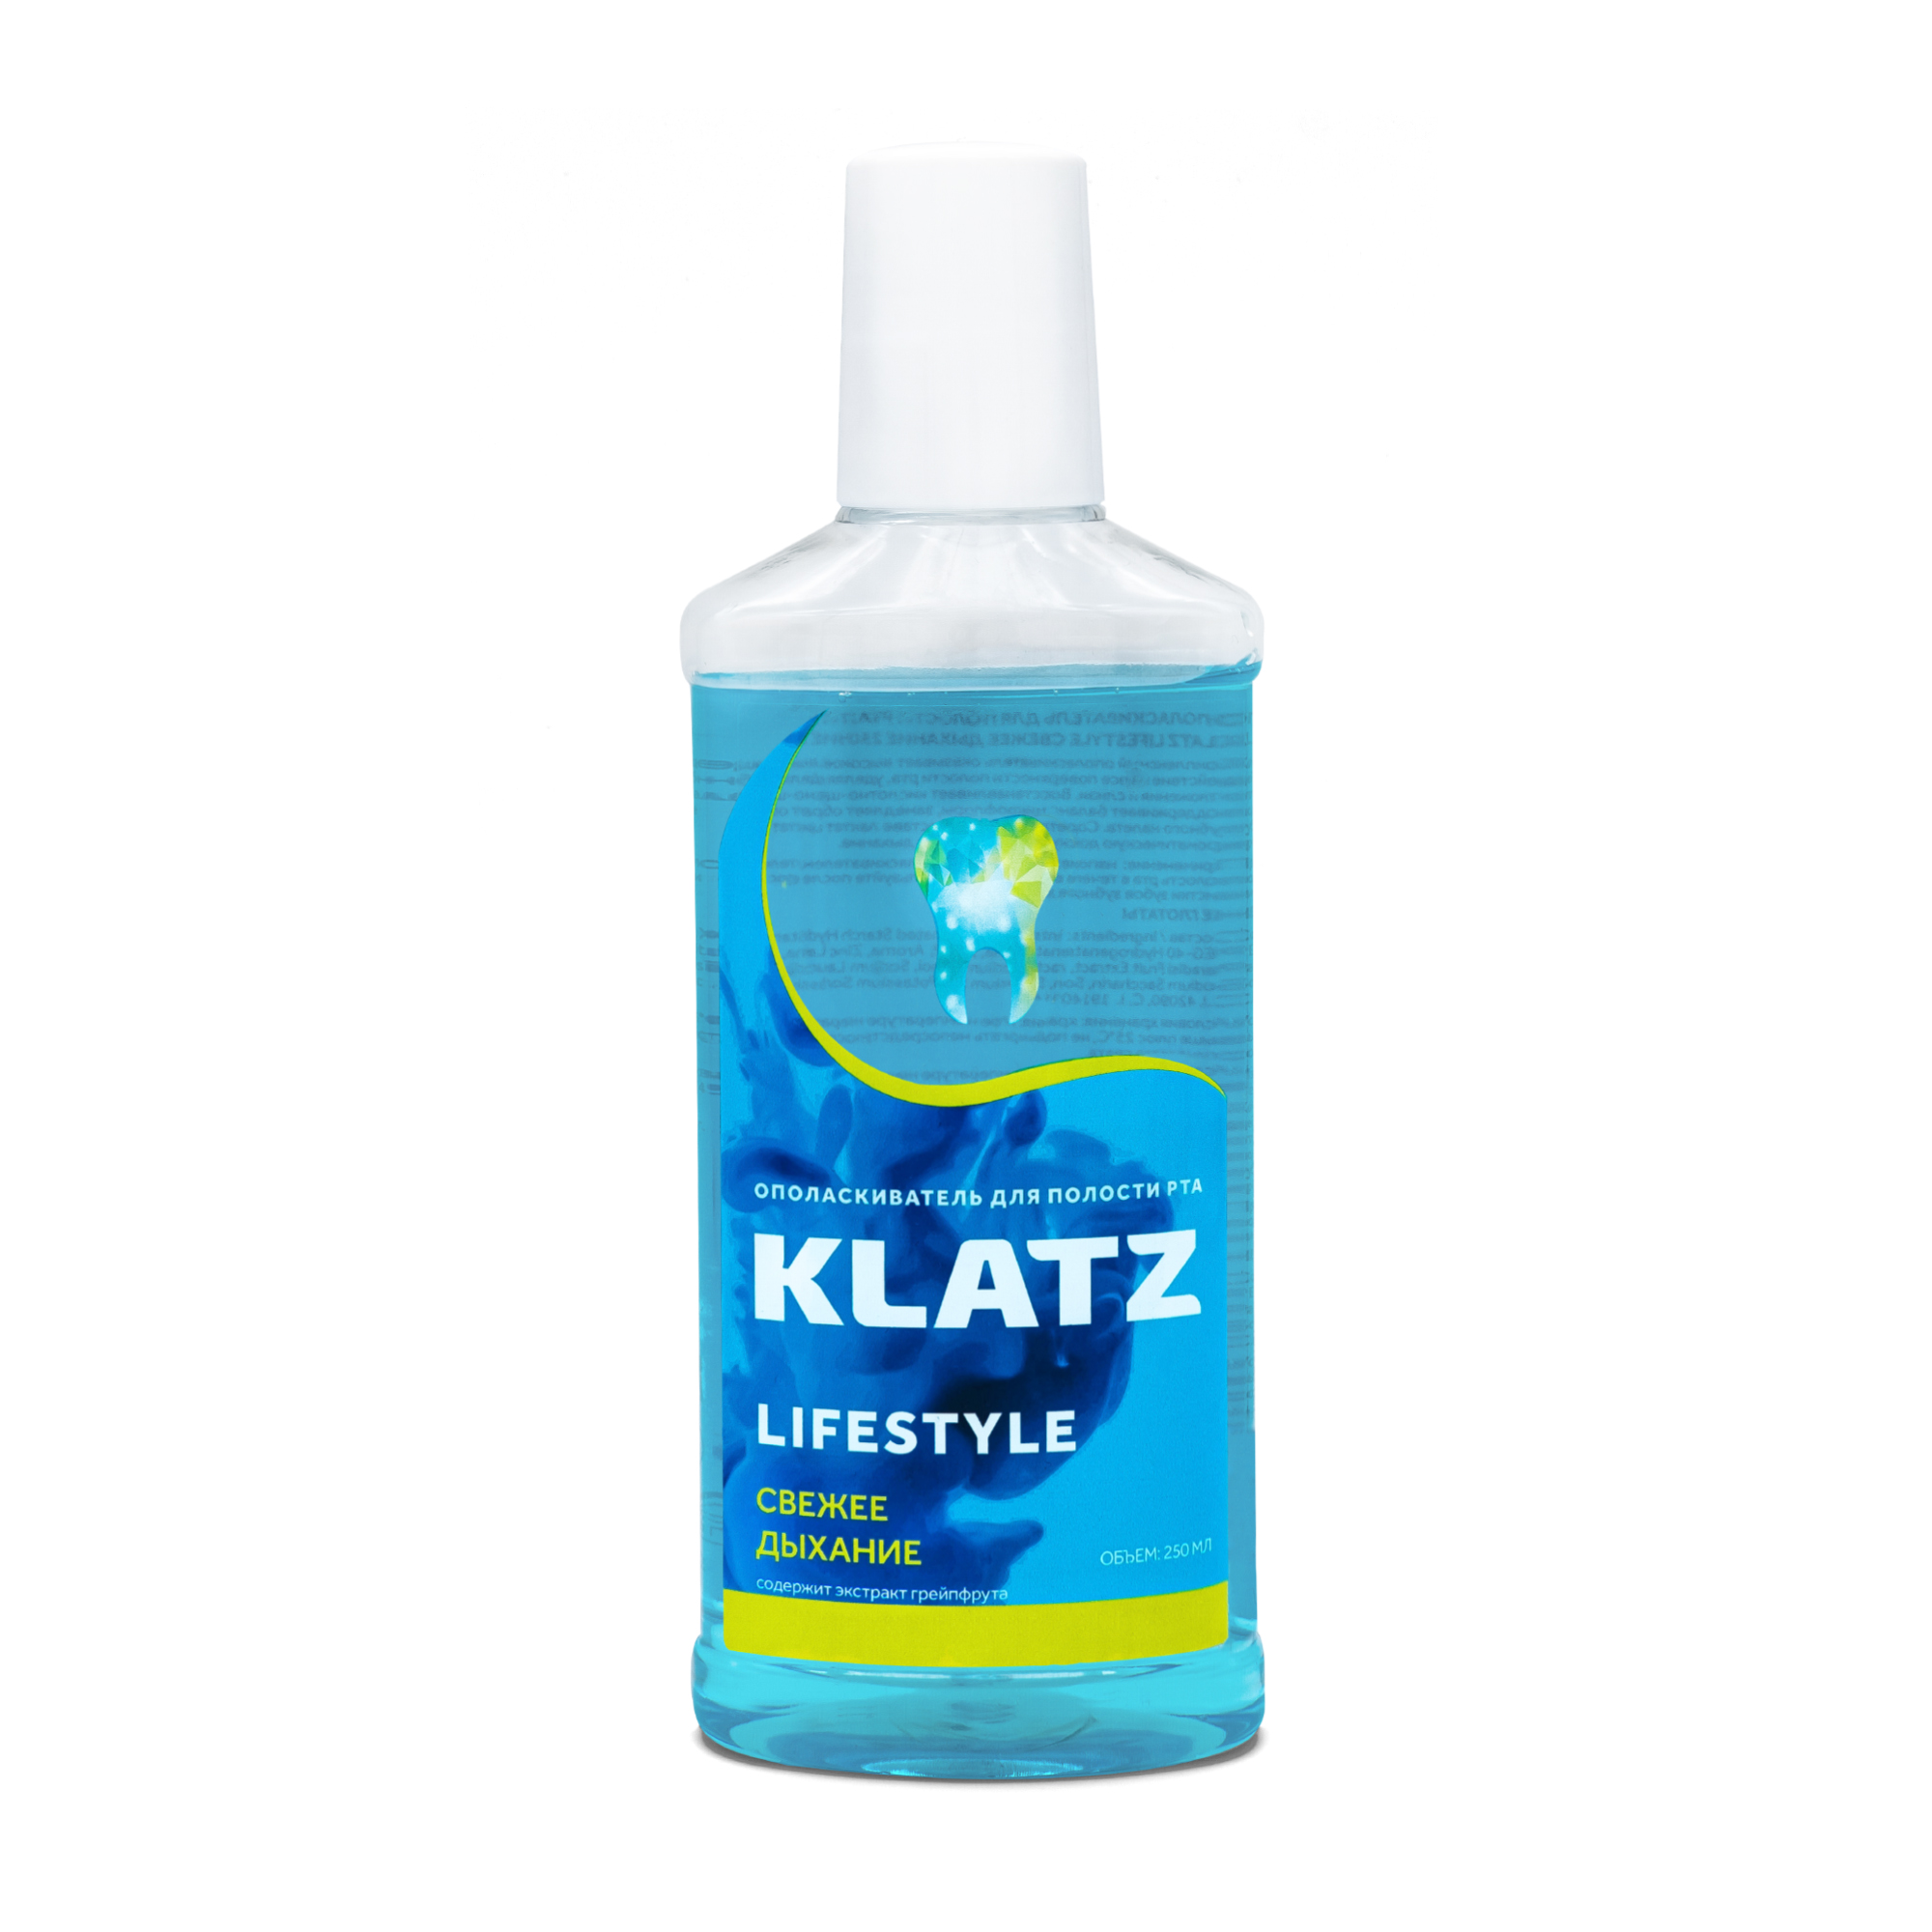 Klatz LIFESTYLE Fresh Breath mouthwash